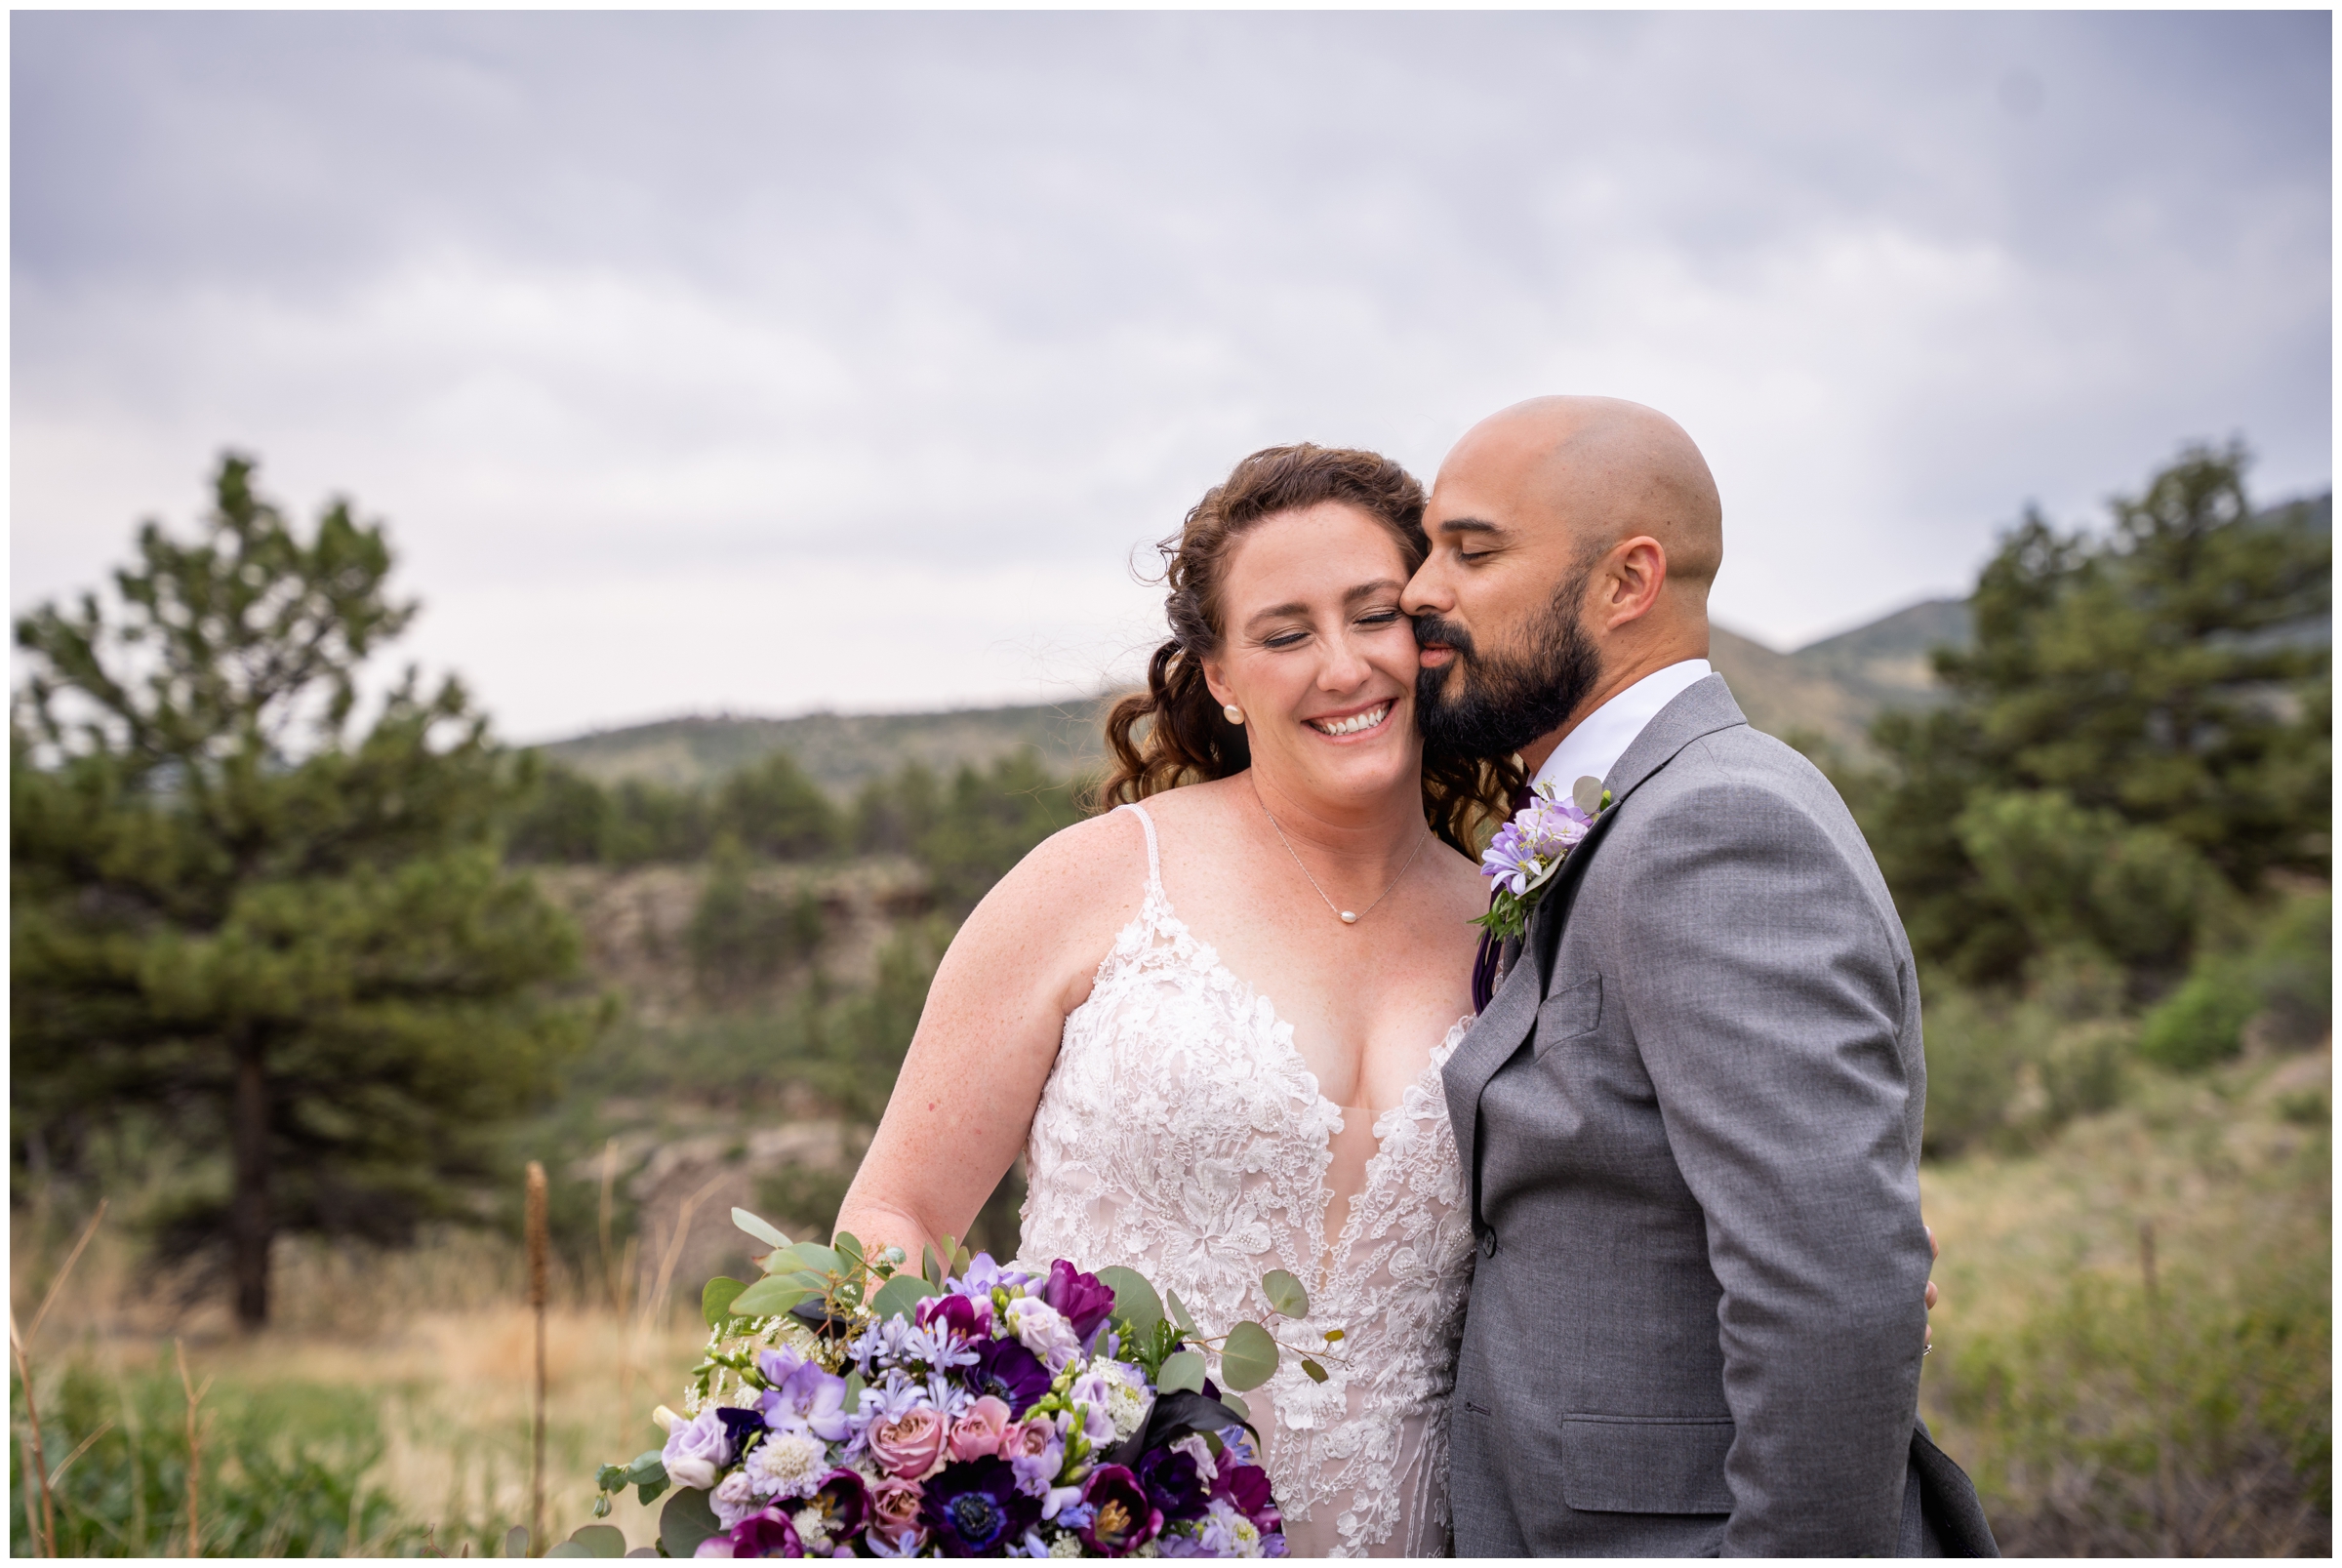 Spring Lionscrest Manor wedding photos by Colorado photographer Plum Pretty Photography